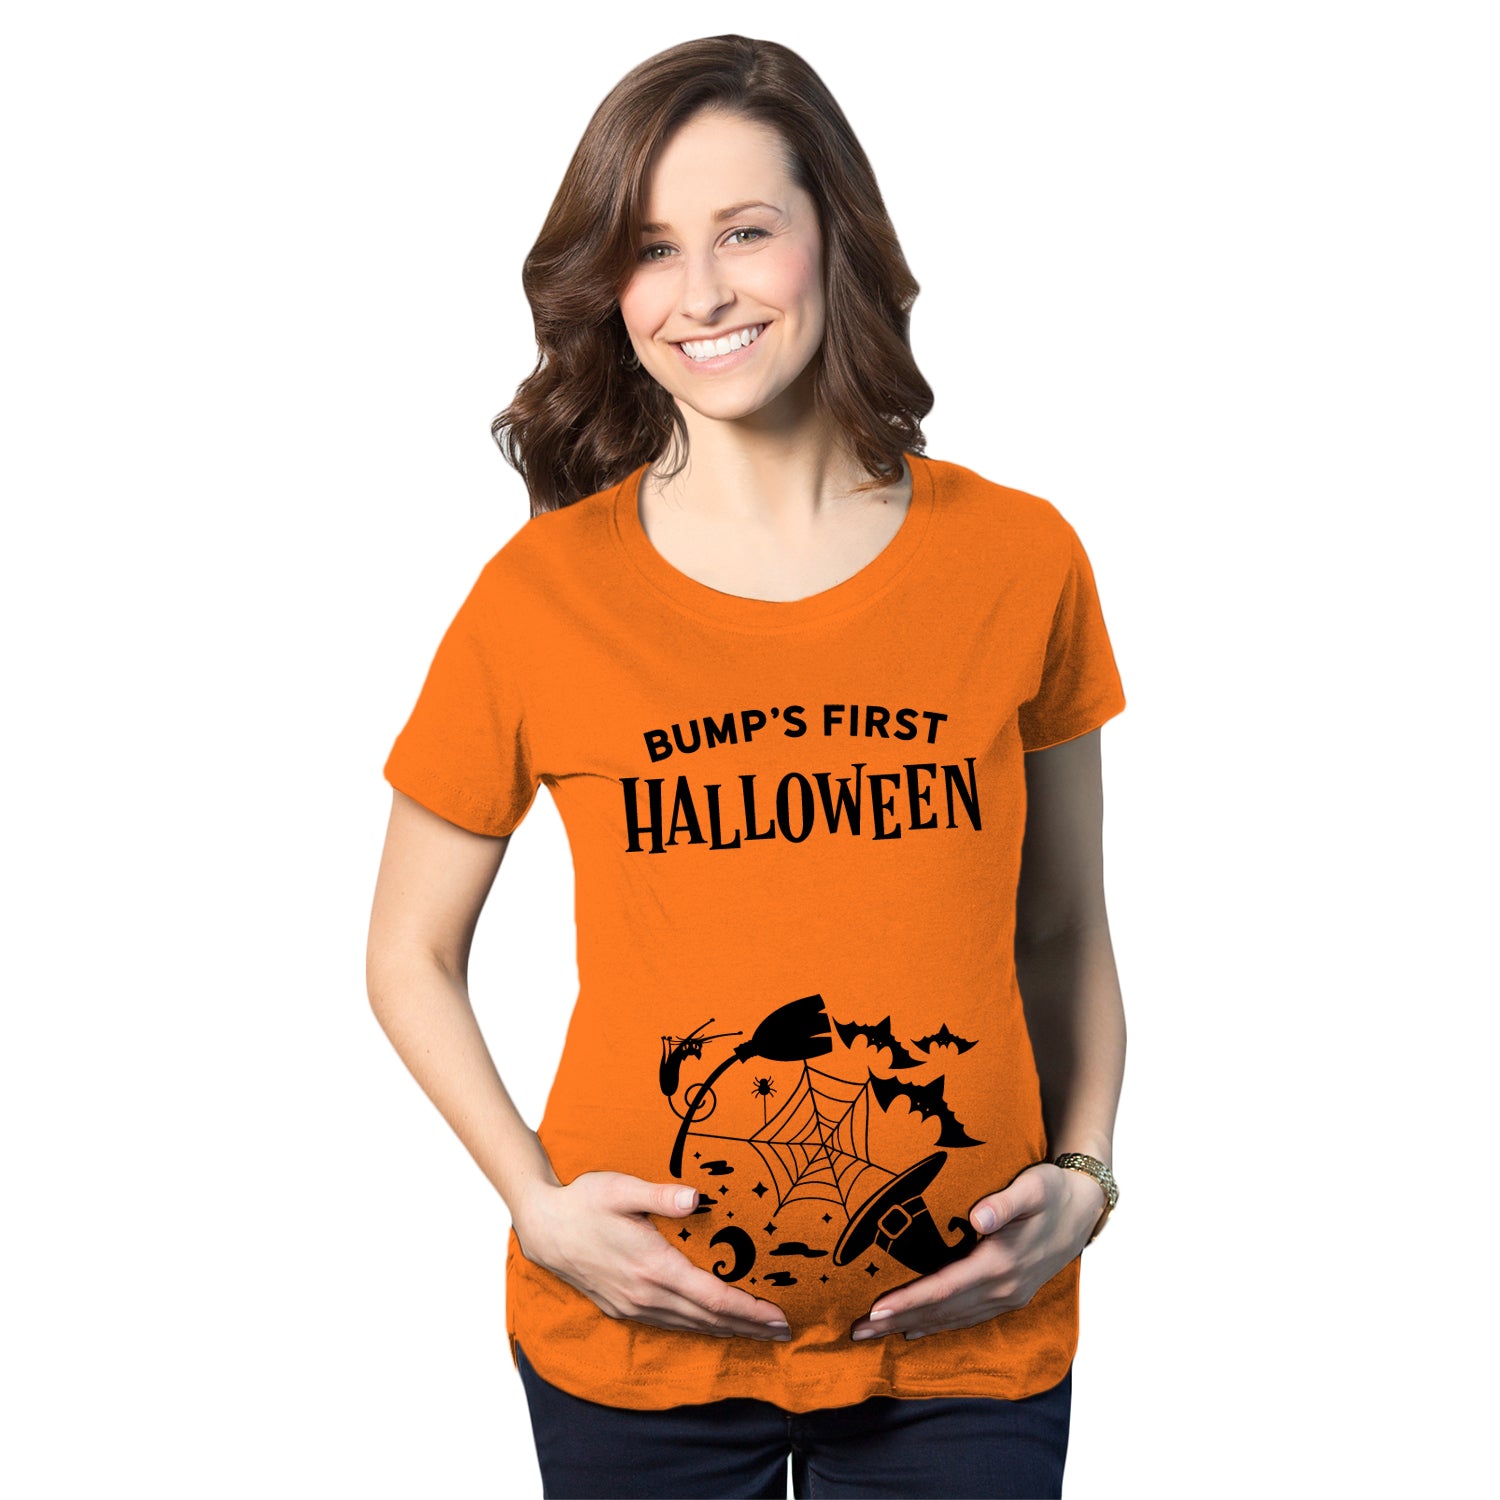 Funny Orange Bump's First Halloween Maternity T Shirt Nerdy Halloween Tee